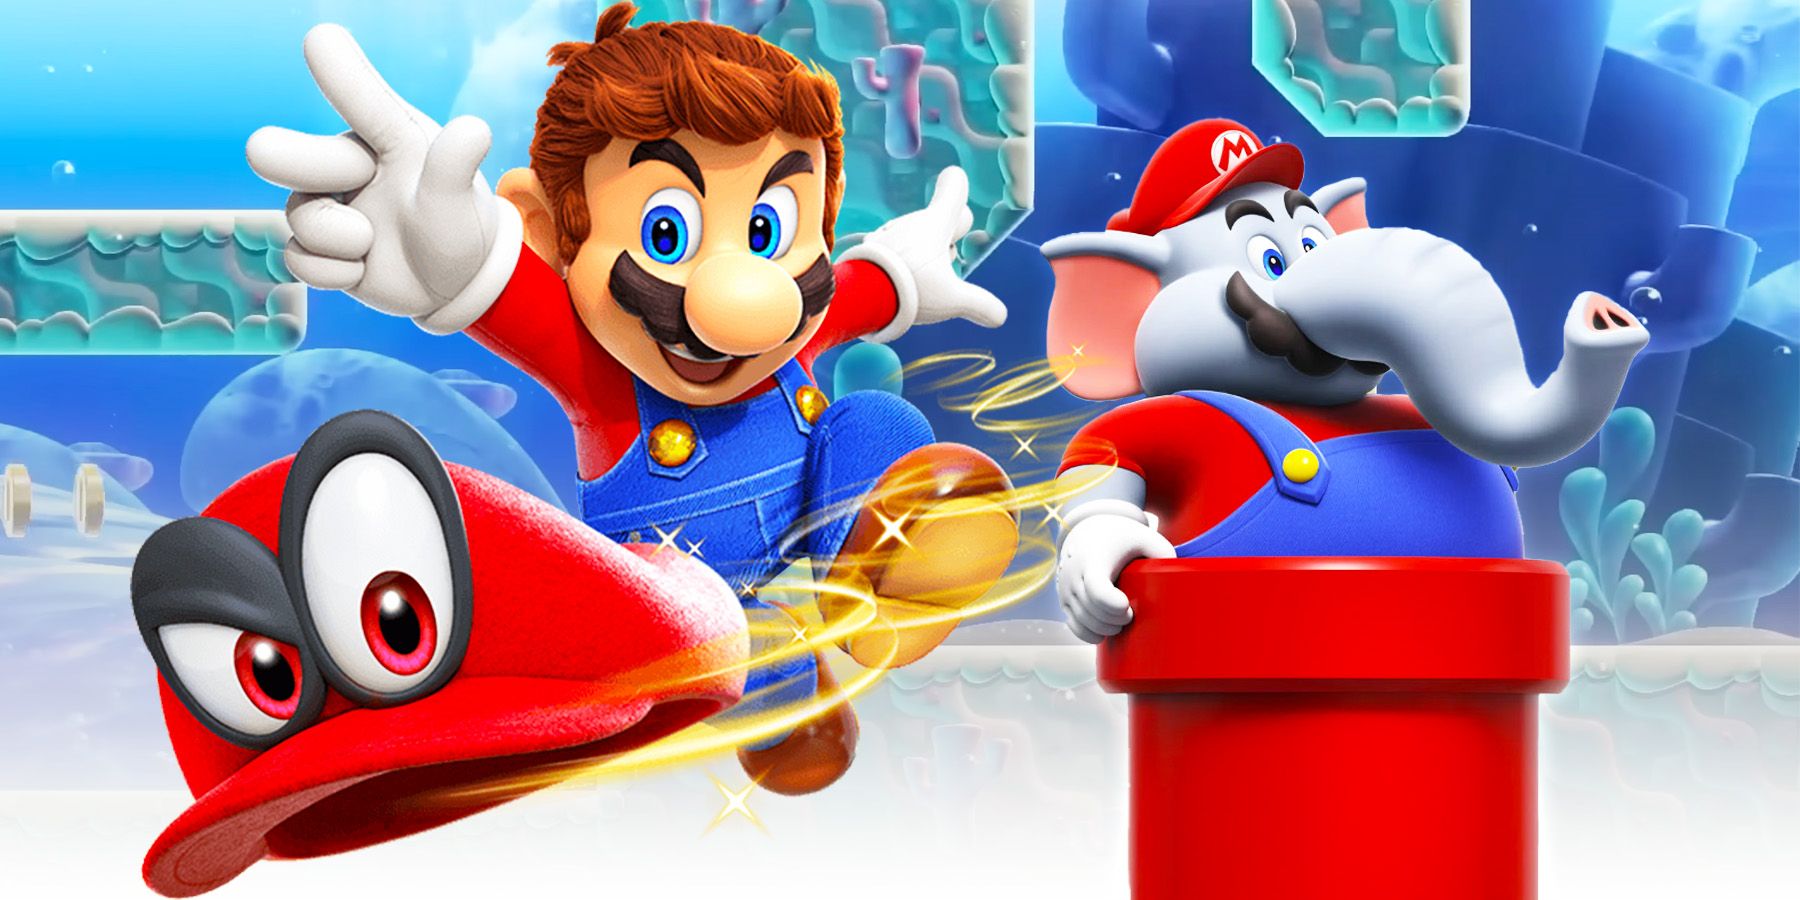 New Mario Games for Nintendo Switch: Mario Wonder, Princess Peach